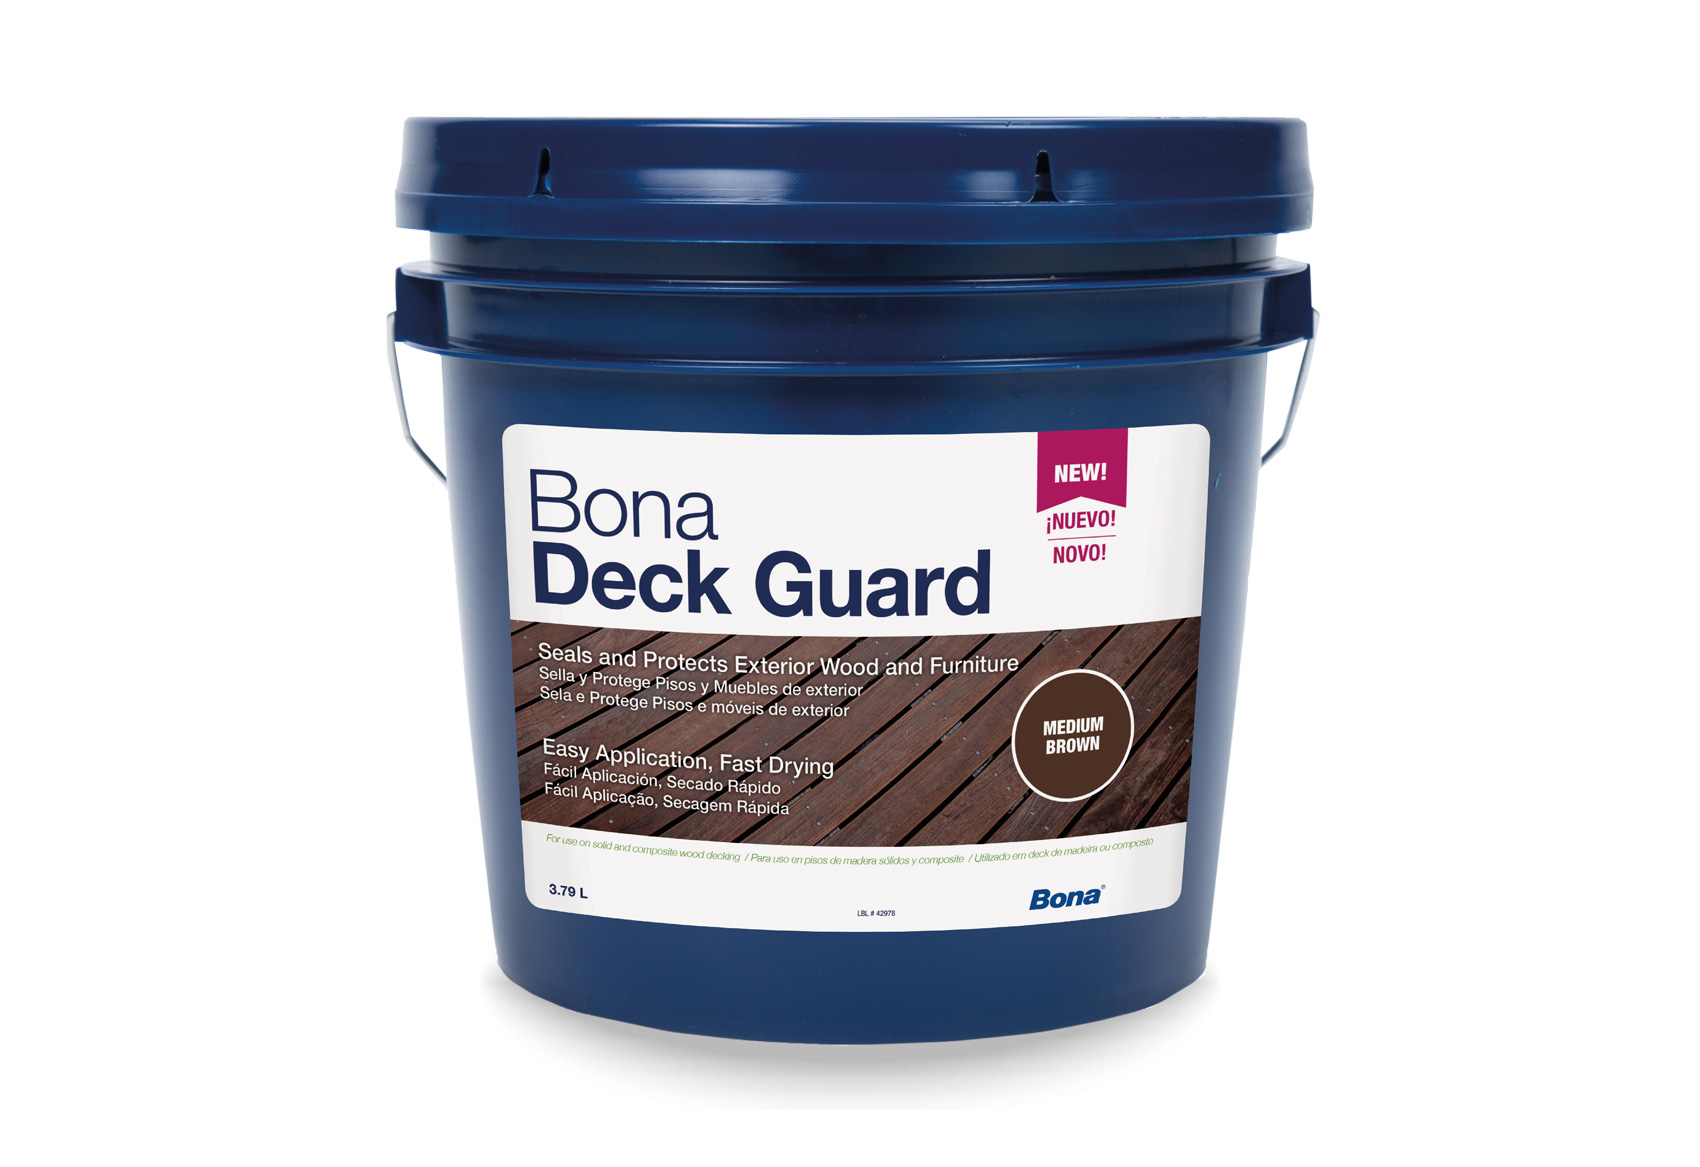 Bona Deck Guard Medium Brown